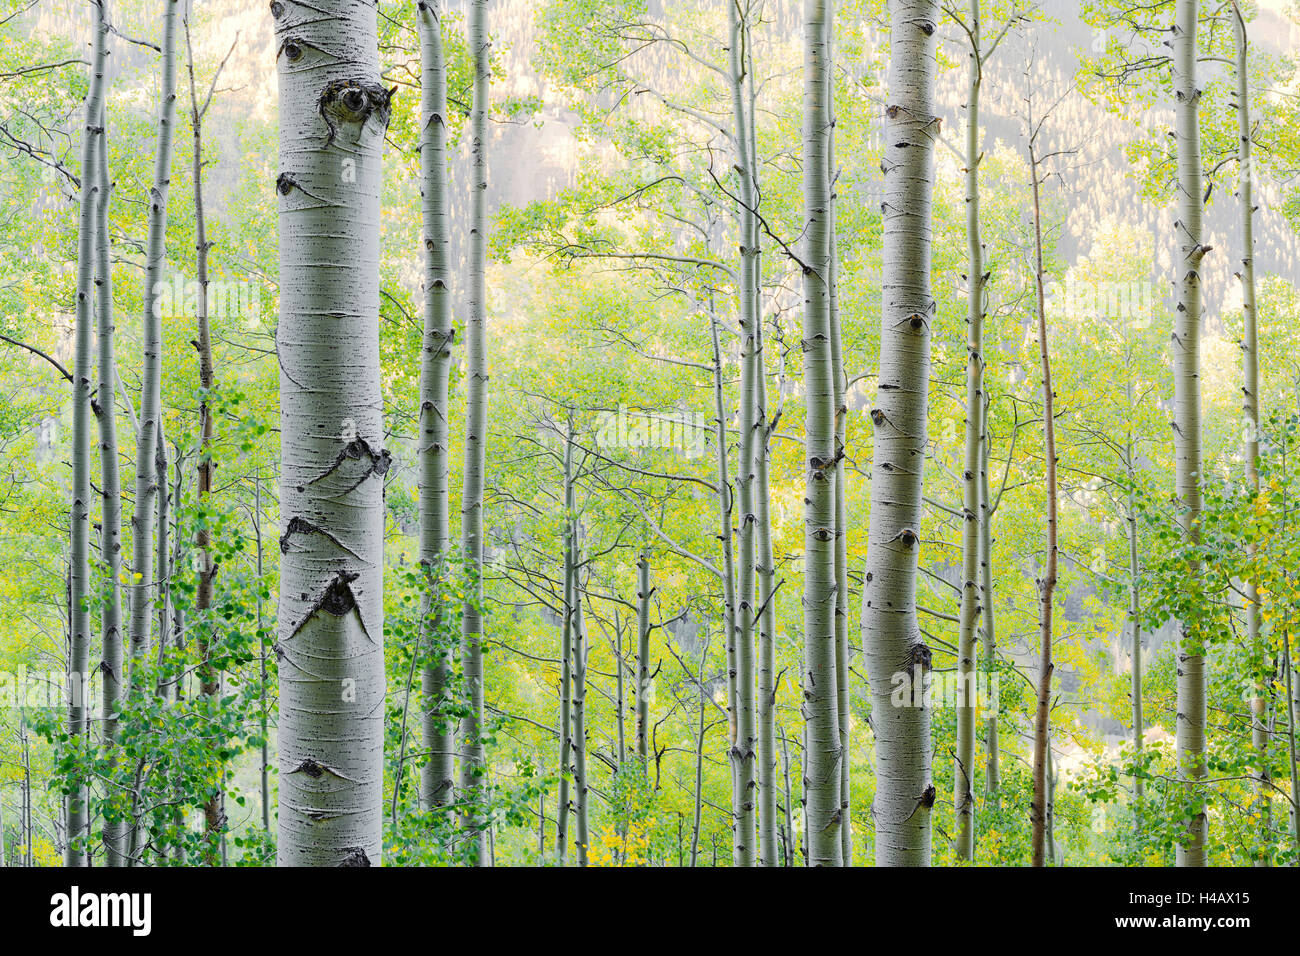 USA, America, Colorado, Aspen, birches, forest, trees, green, yellow, Stock Photo